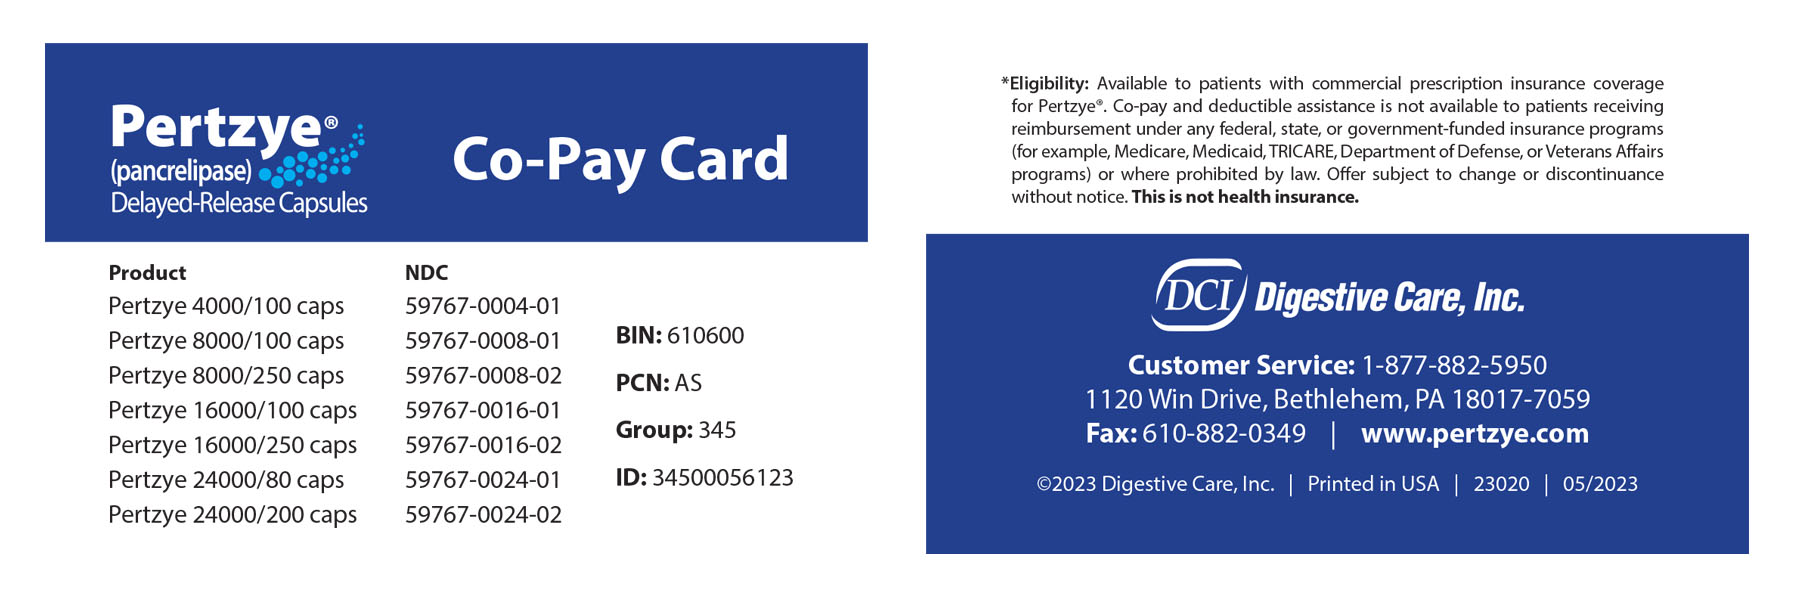 Pertzye Copay Card